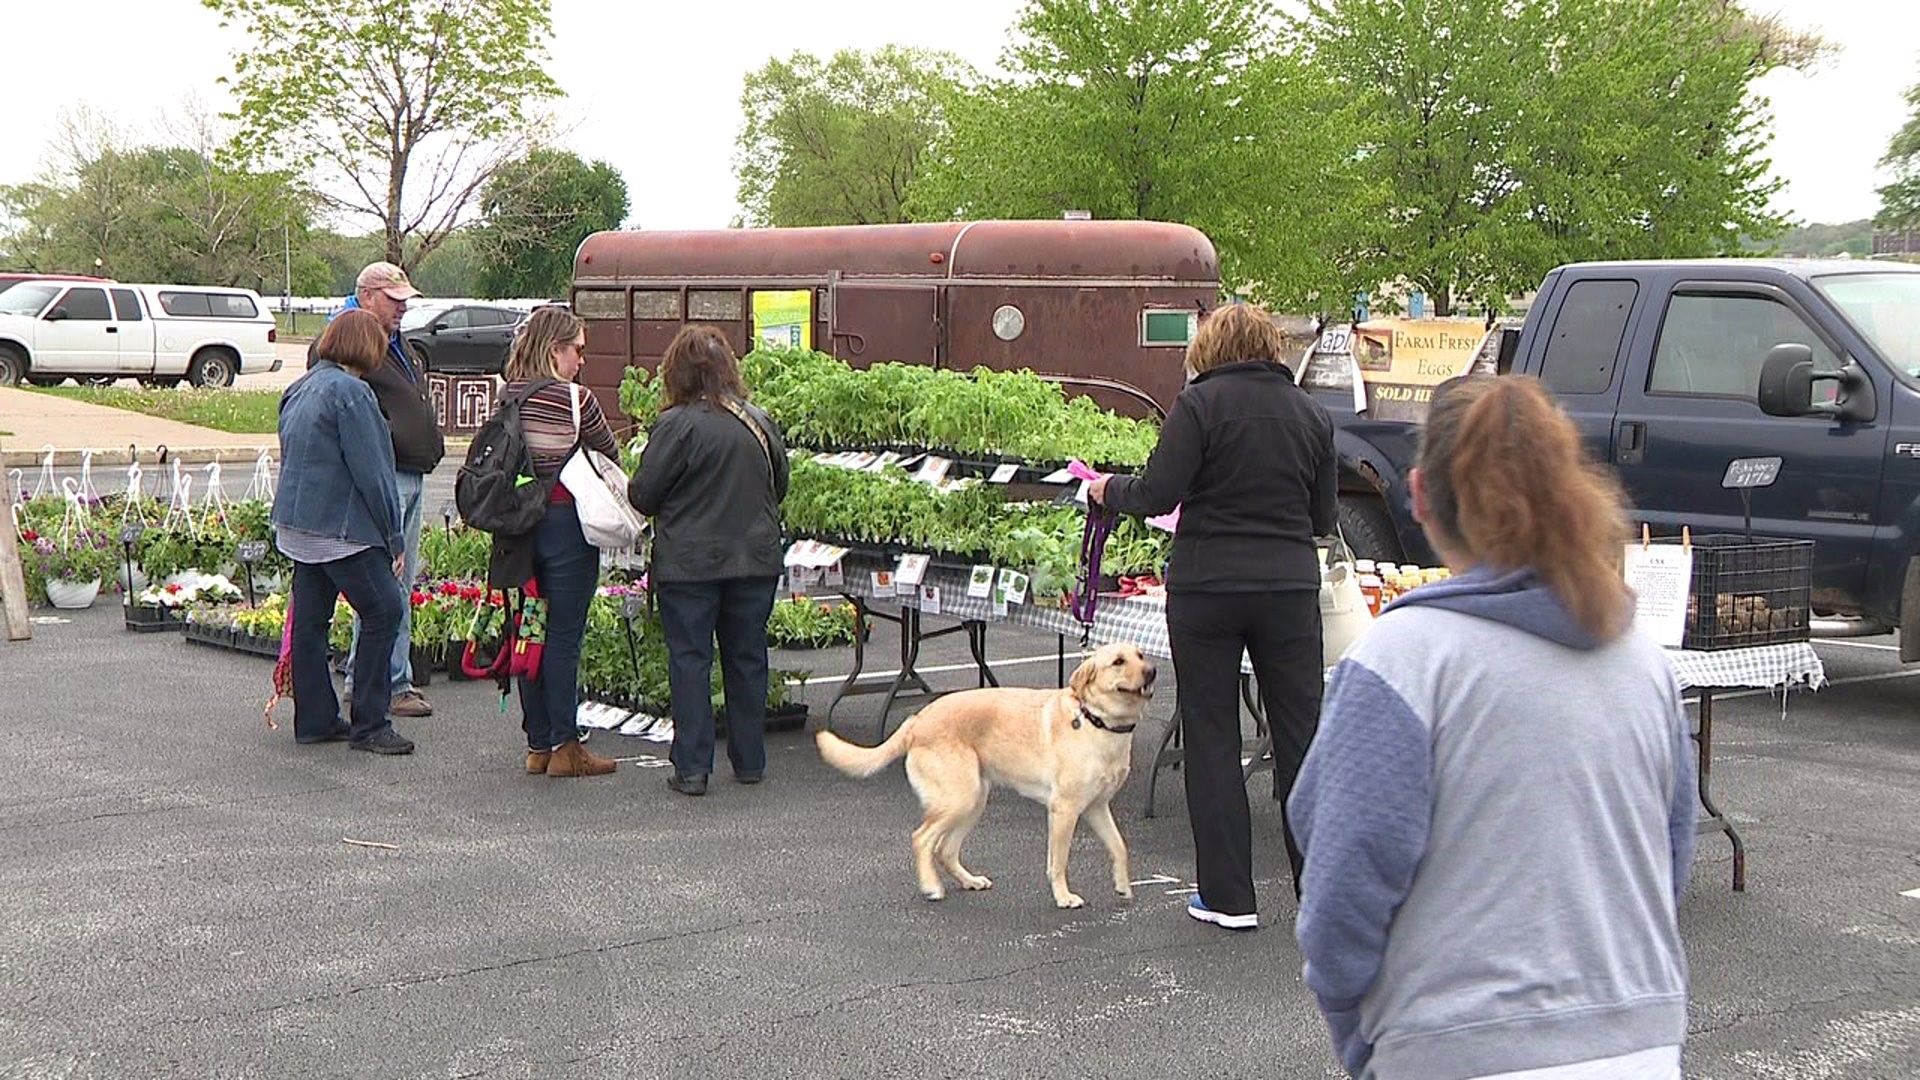 New rules regarding dogs at Davenport farmers market